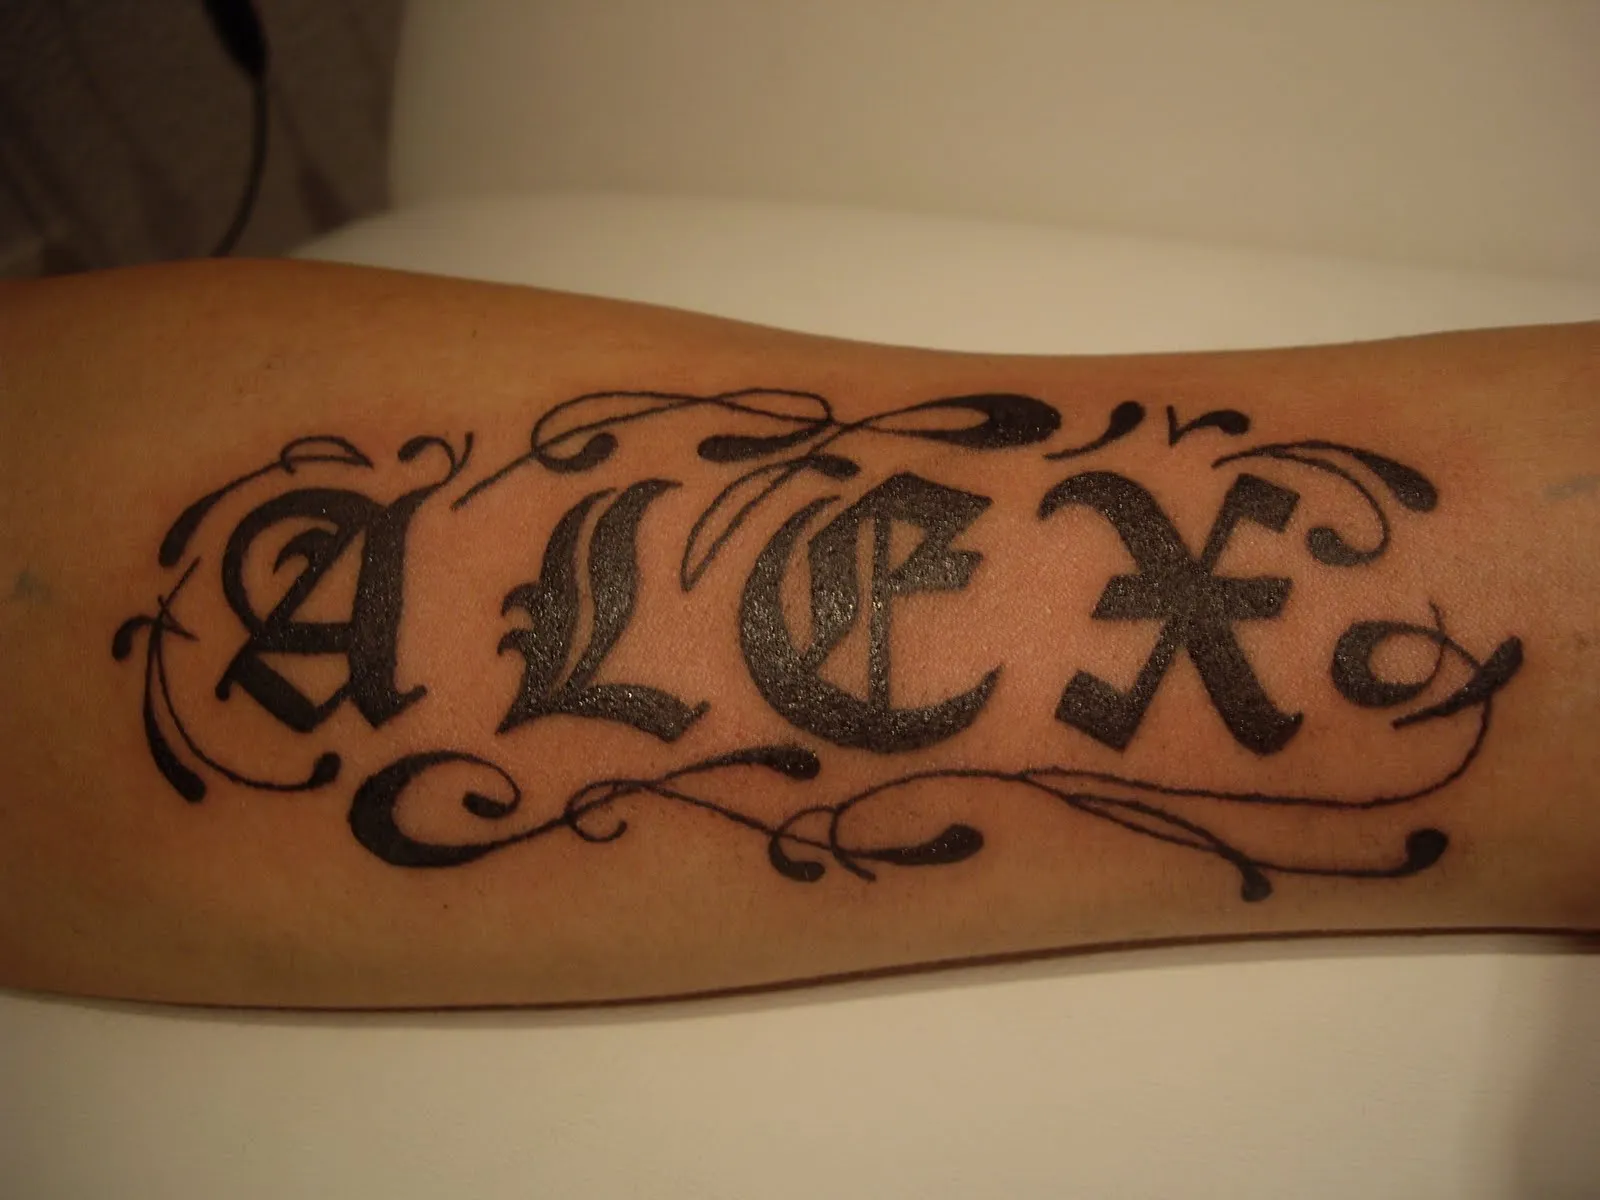 Tattoo & Piercing: - Tattoo antebrazo letras goticas.